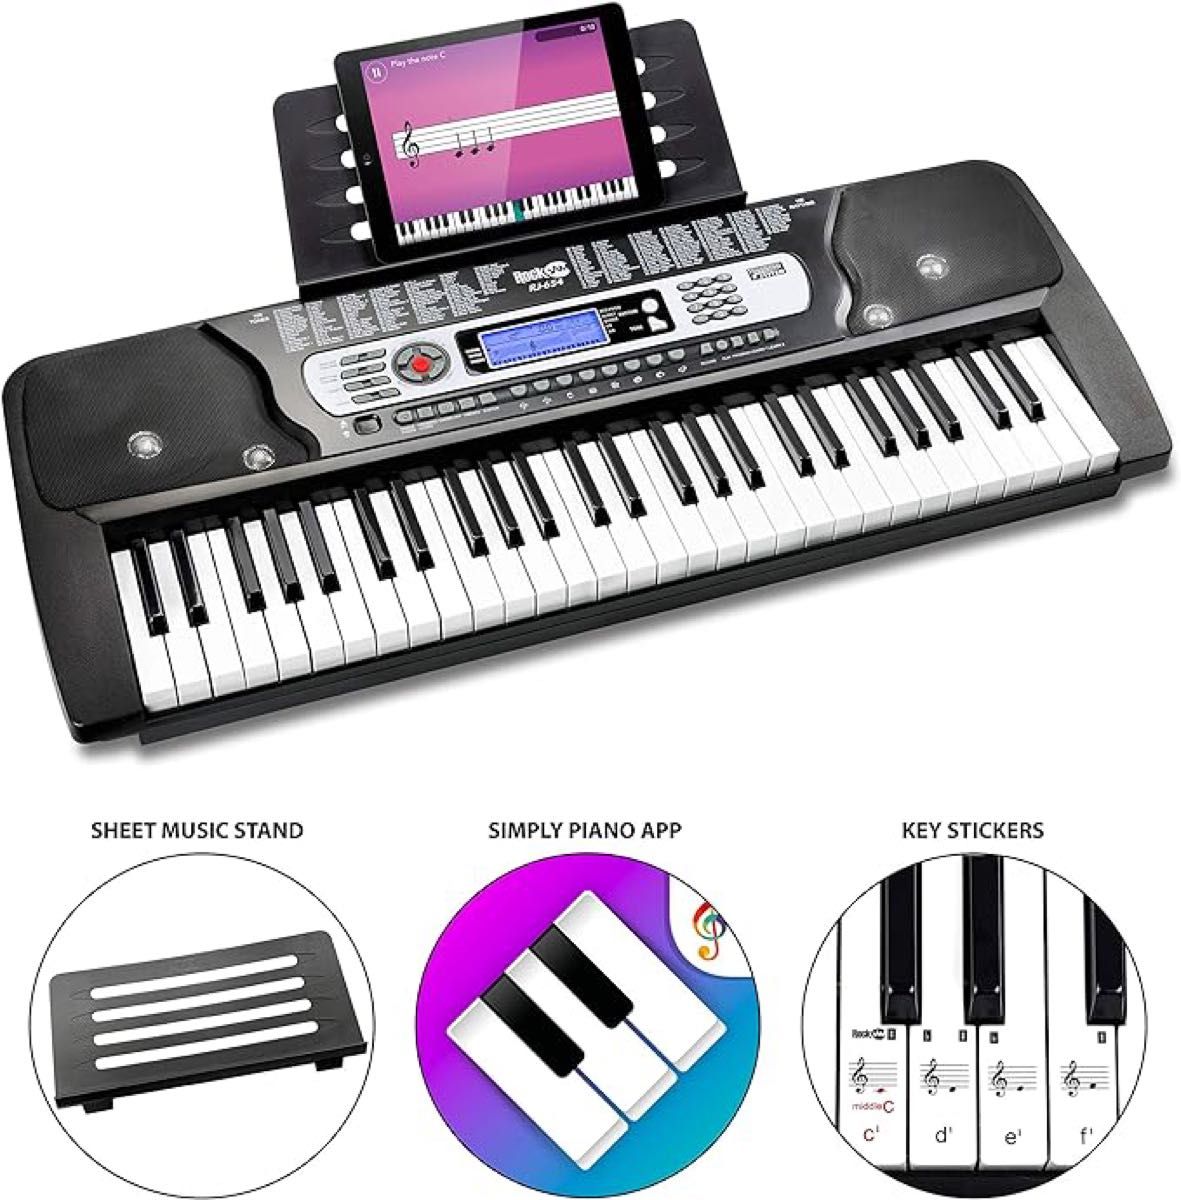 RockJam 54鍵 電子キーボード RJ654-MC オンラインアプリ付属　本格的なピアノ鍵盤のタッチを再現　100の音色効果